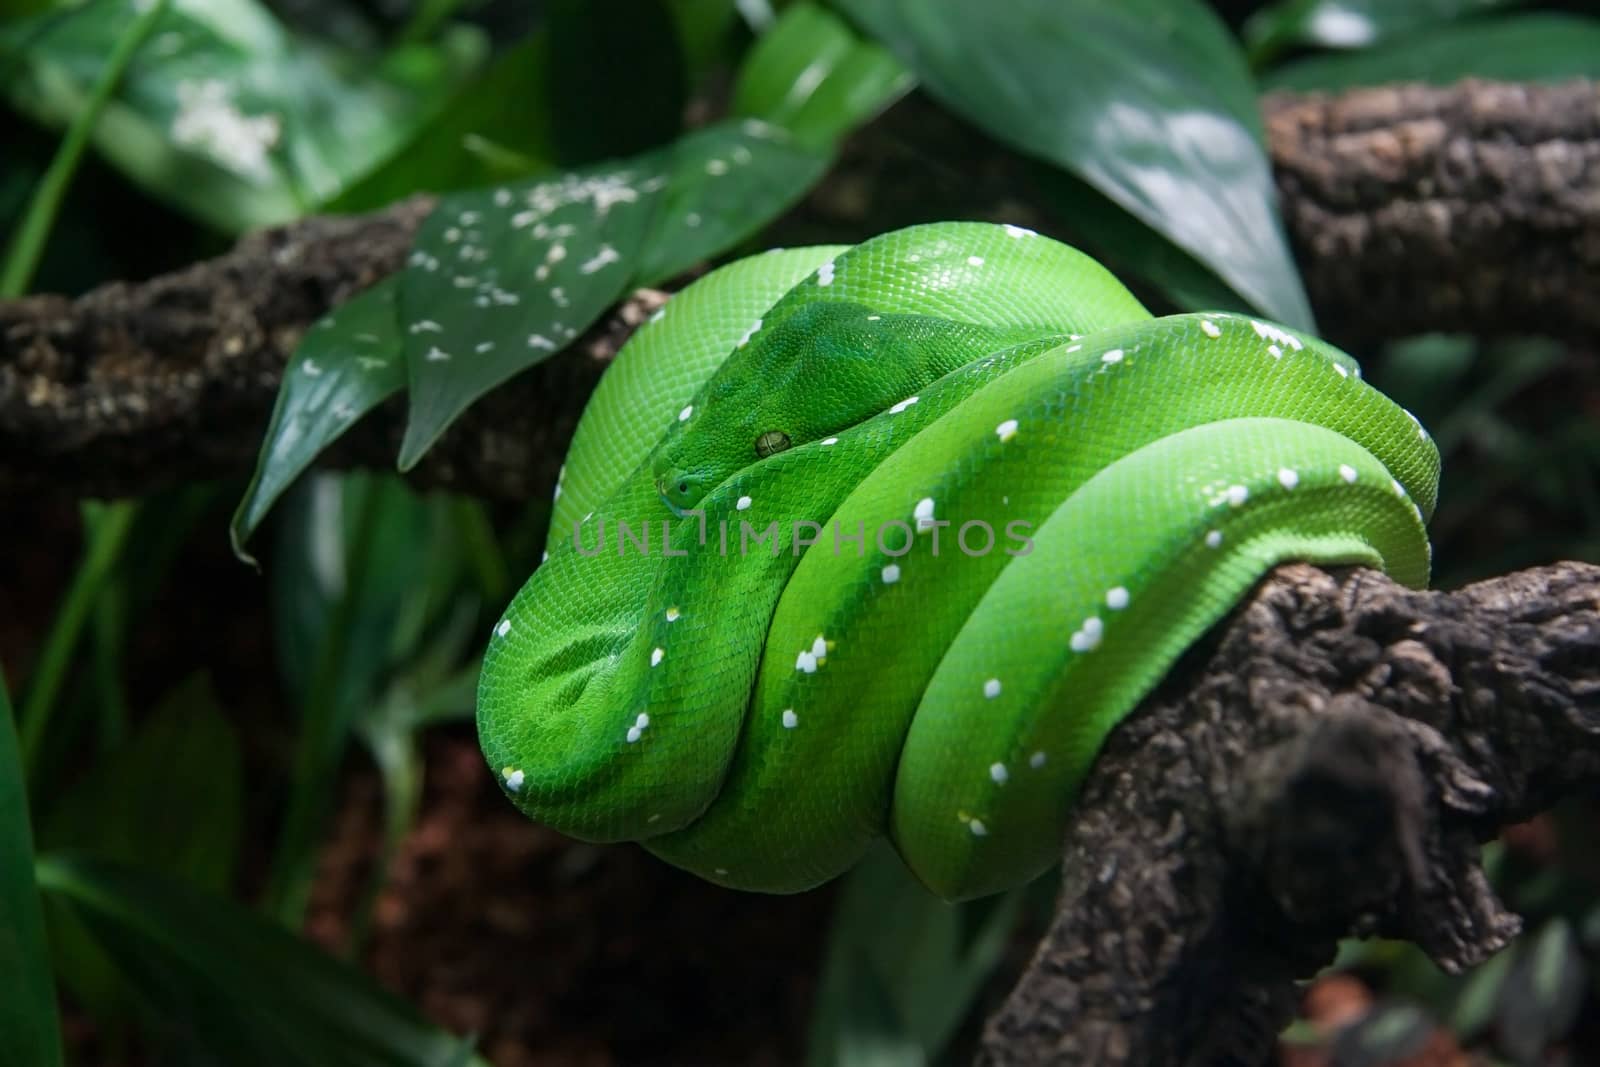 Green tree python (Morelia viridis) resting on tree branch